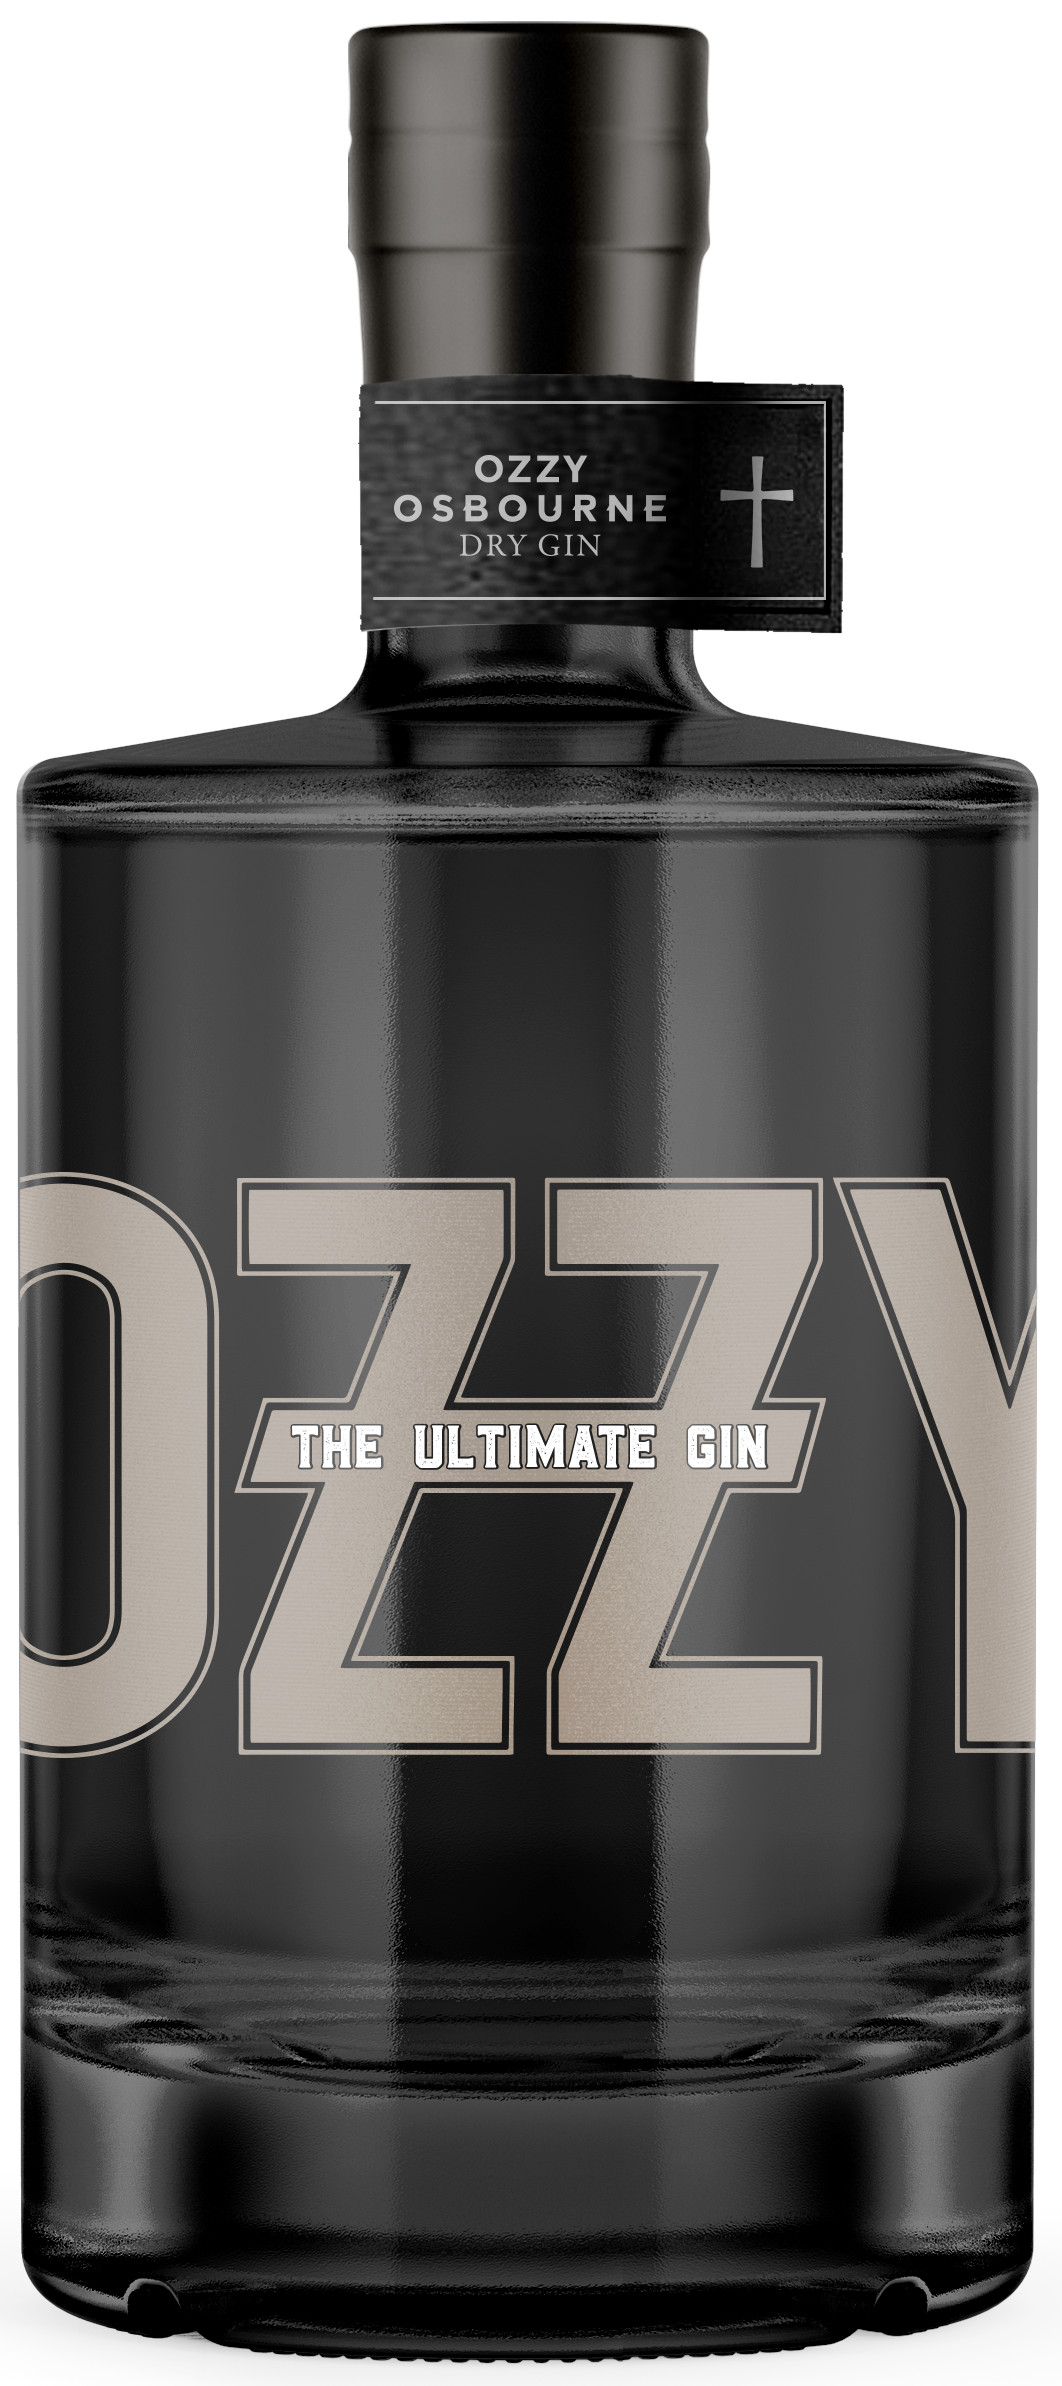 Ozzy Osbourne Dry Gin "The Ultimate Gin" - 500 ml